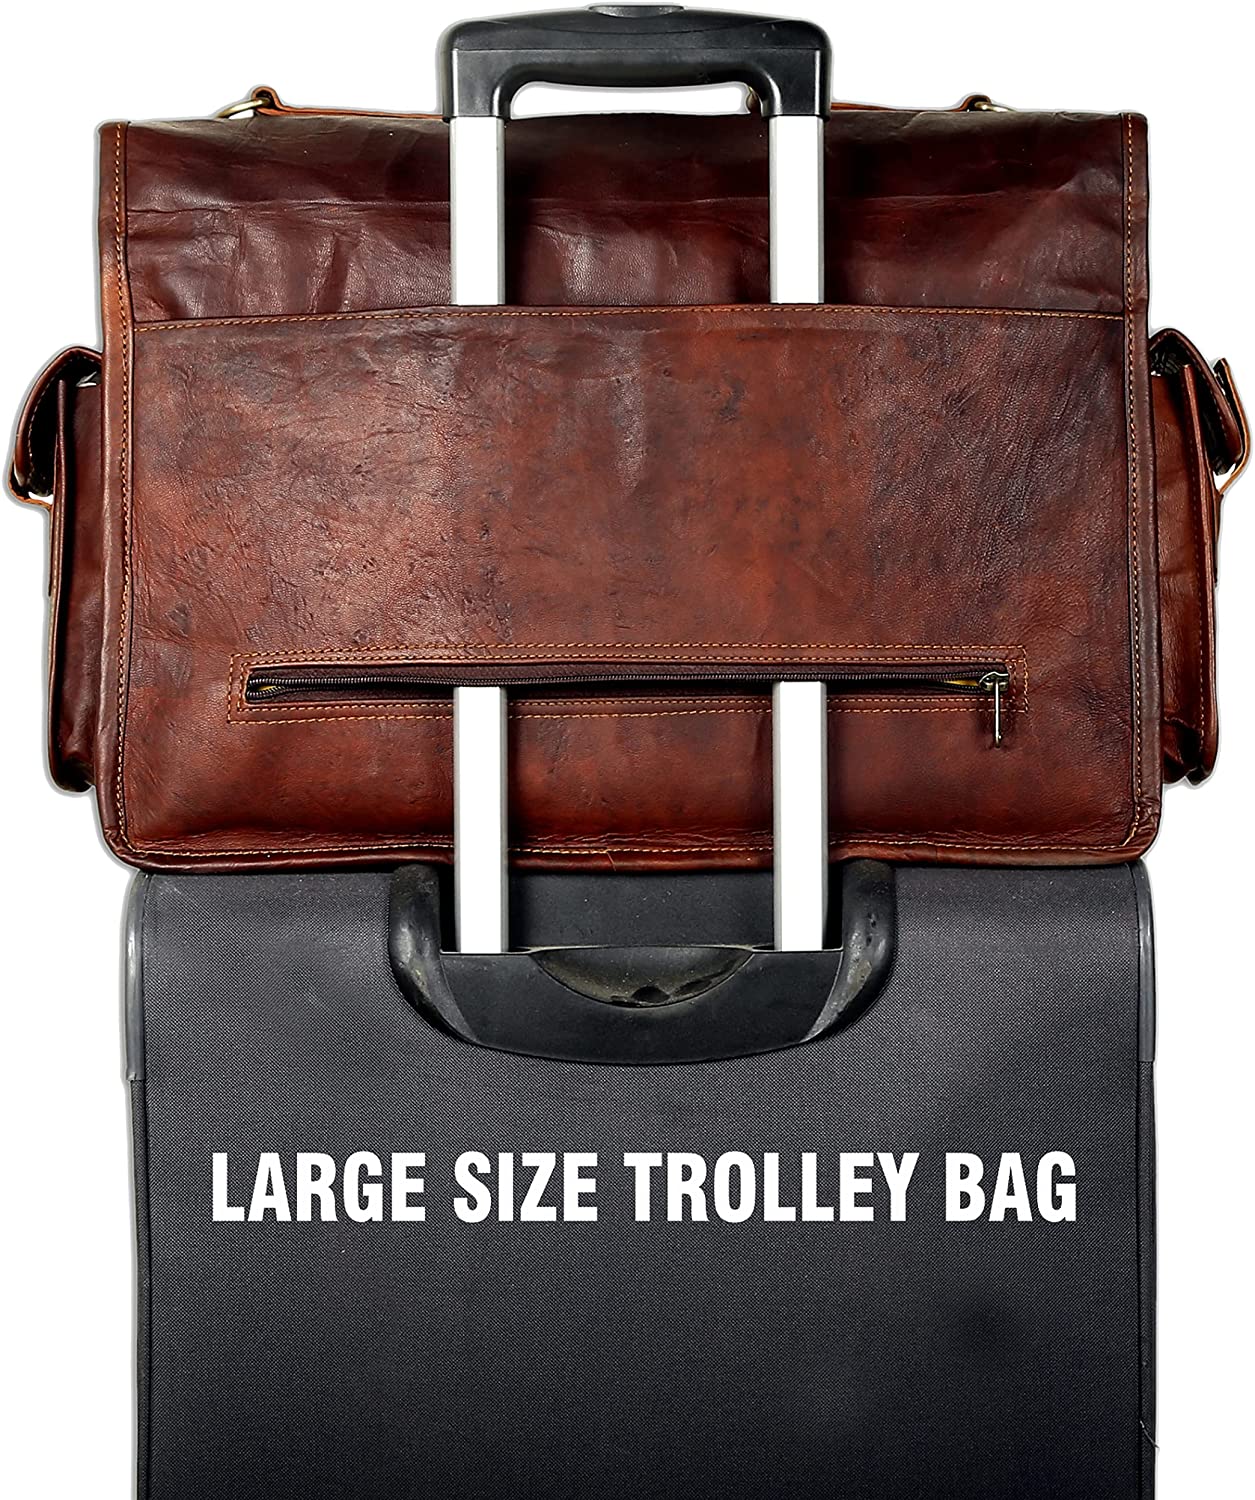 travel friendlly messenger bag